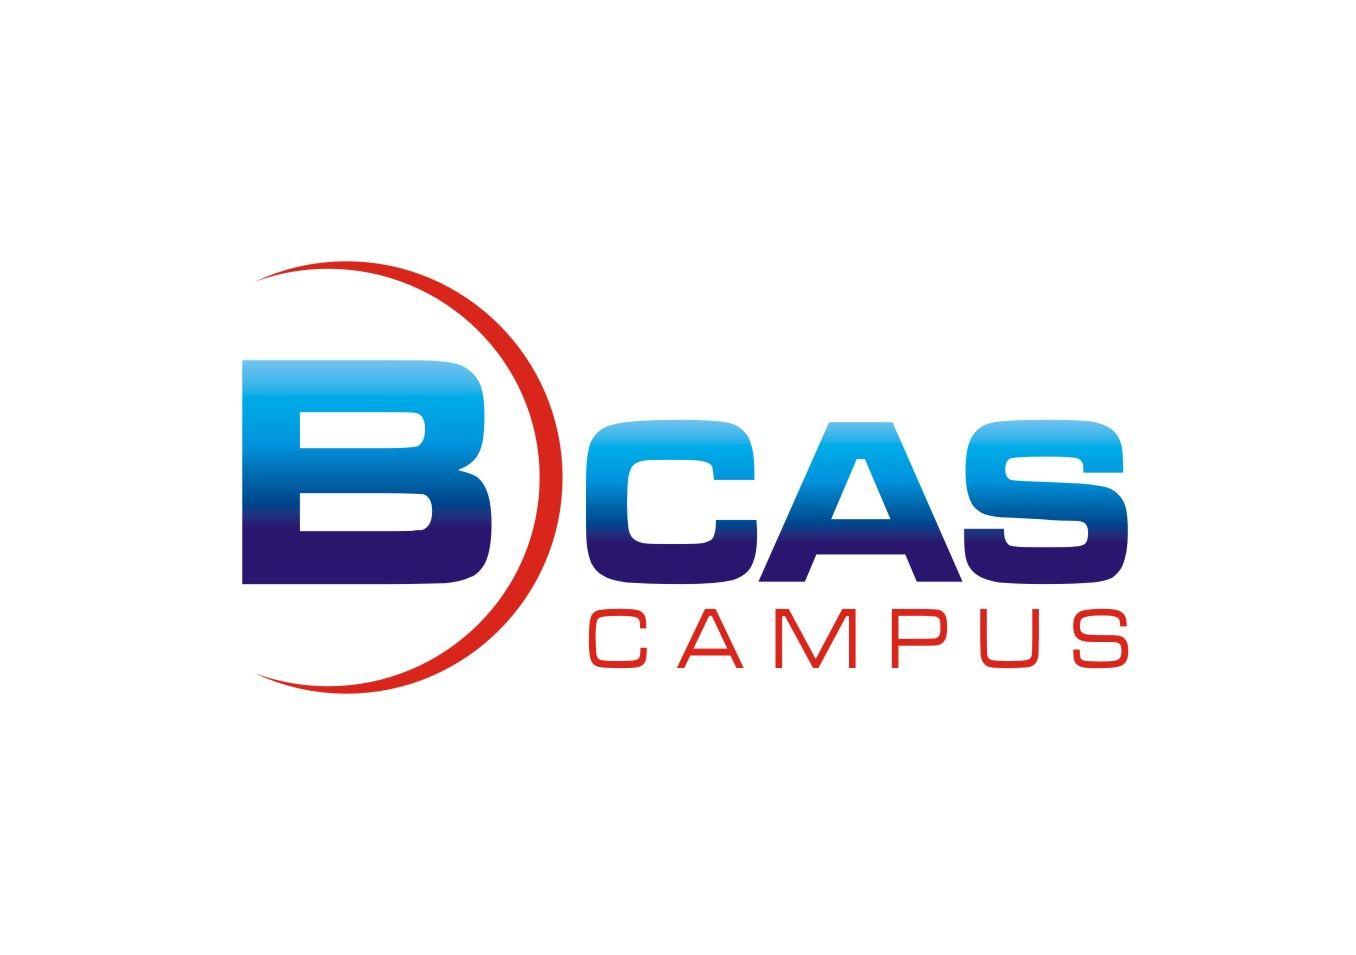 Bcas Campus Logo - Bold, Serious, University Logo Design for BCAS CAMPUS